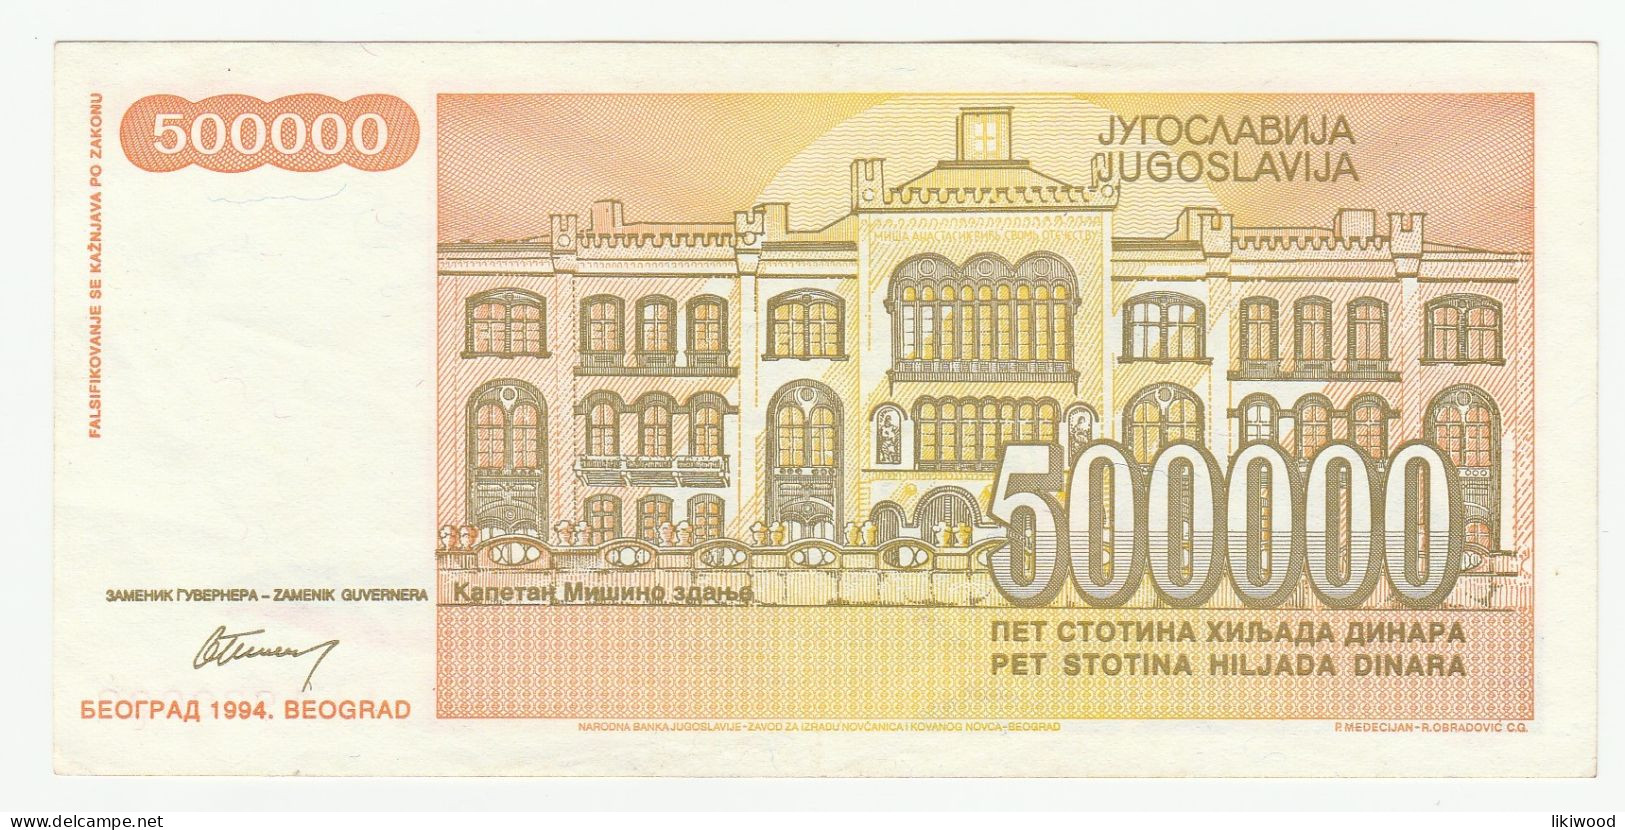 500 000 Dinara - 1994 - Yugoslavia - Jovan Cvijić - Kapetan Mišino Zdanje (error Signature Deputy Governor) - Yougoslavie